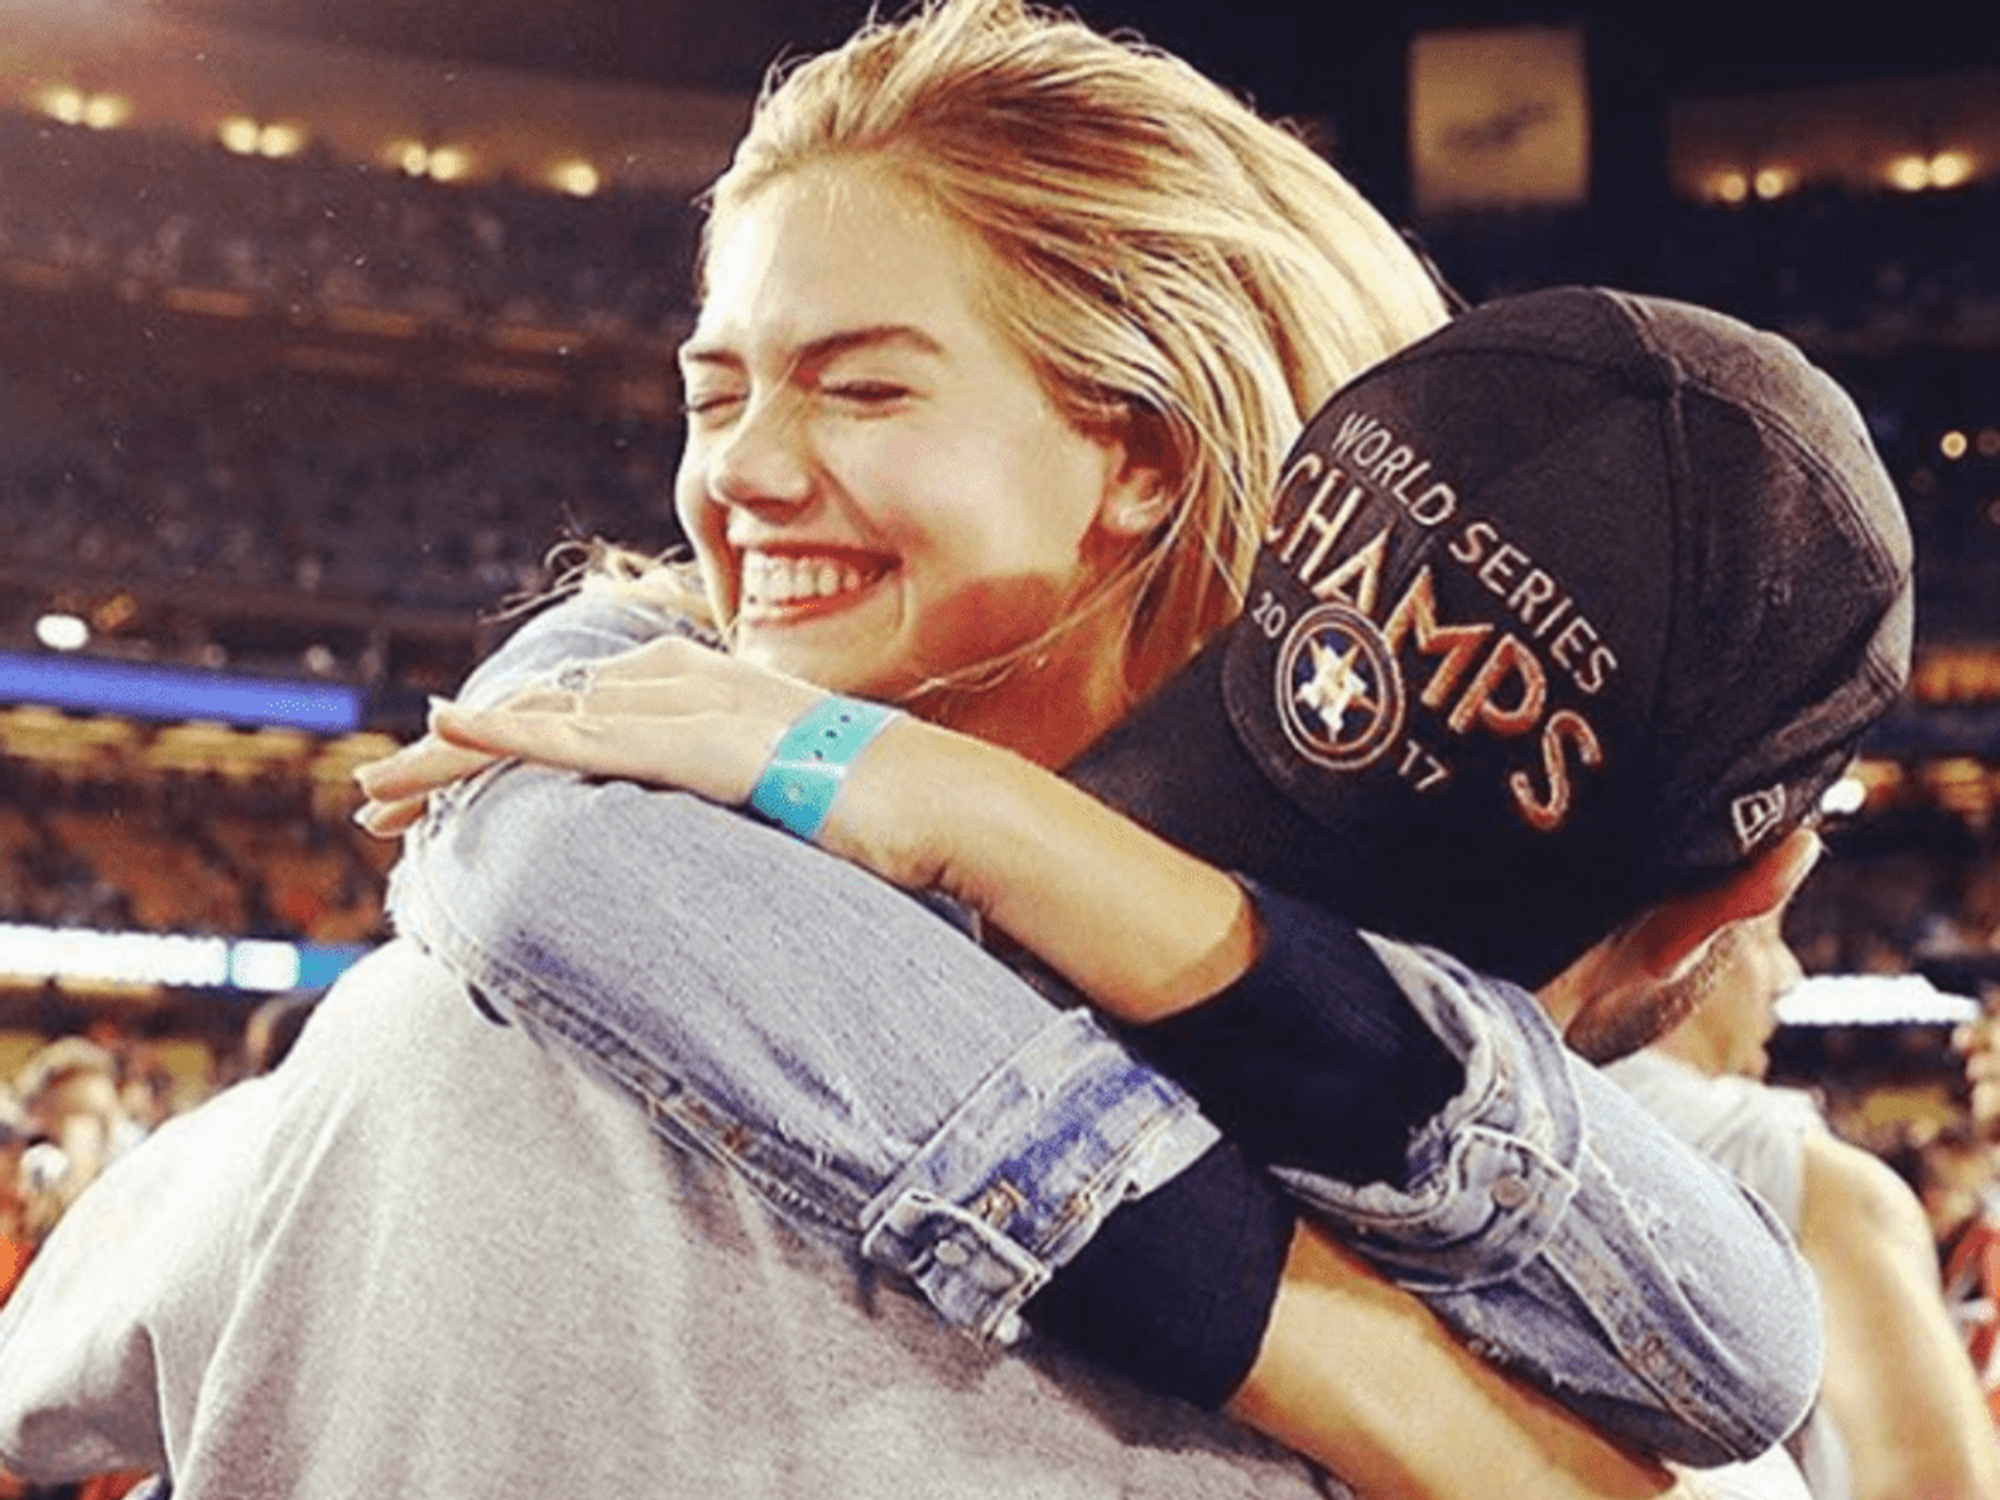 Kate Upton and Justin Verlander celebrate World Series win